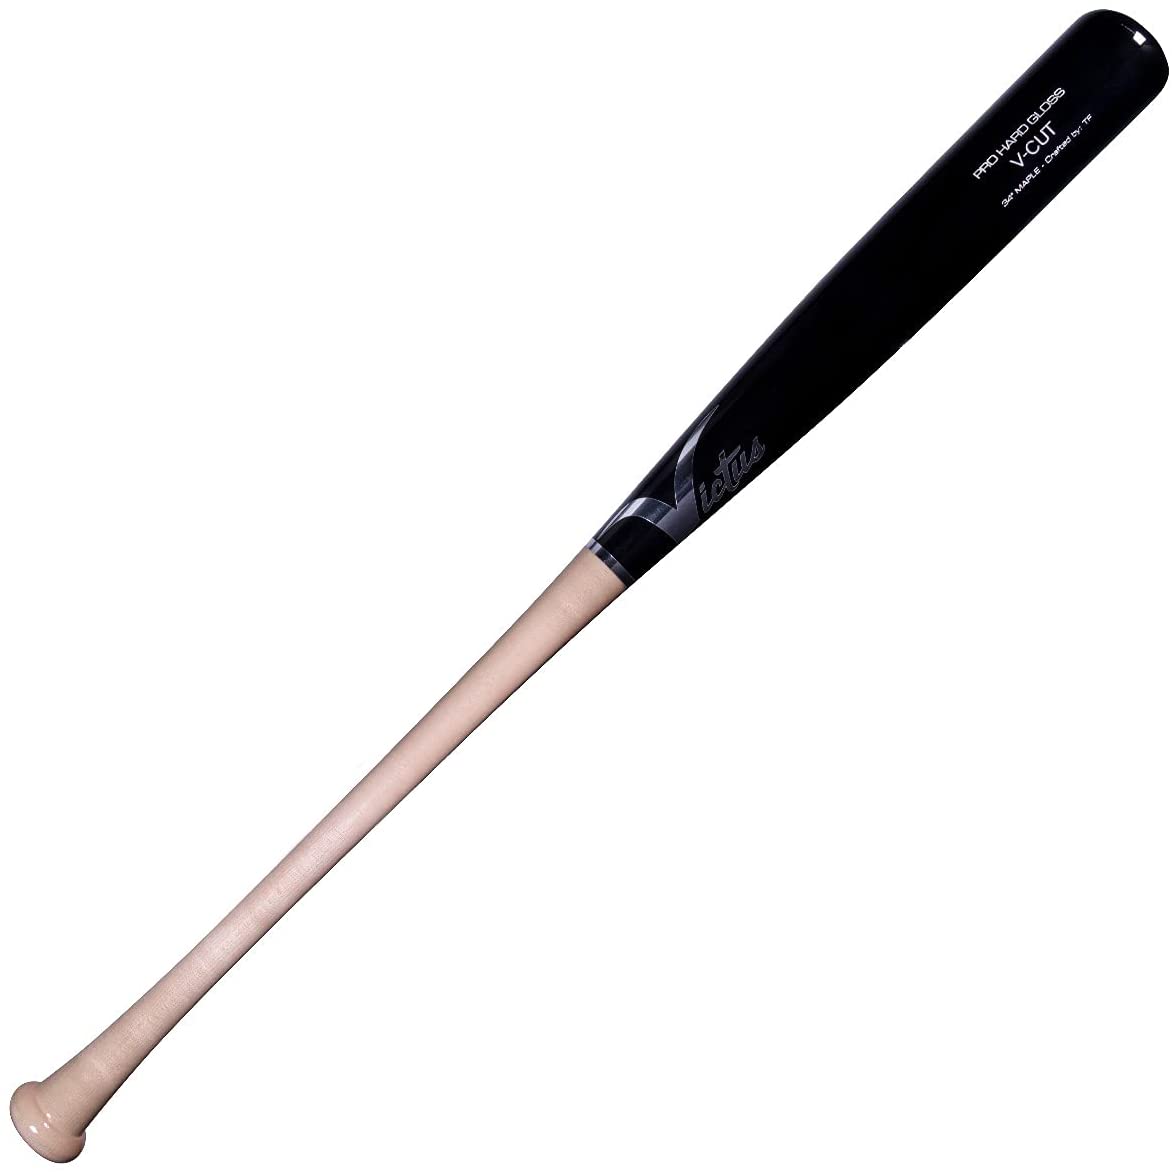 victus-v-cut-natural-black-wood-baseball-bat-33-inch VGPC-N-BK-33 Victus   Wood Maple Drop Weight Approx. -3 Big League-grade ink dot